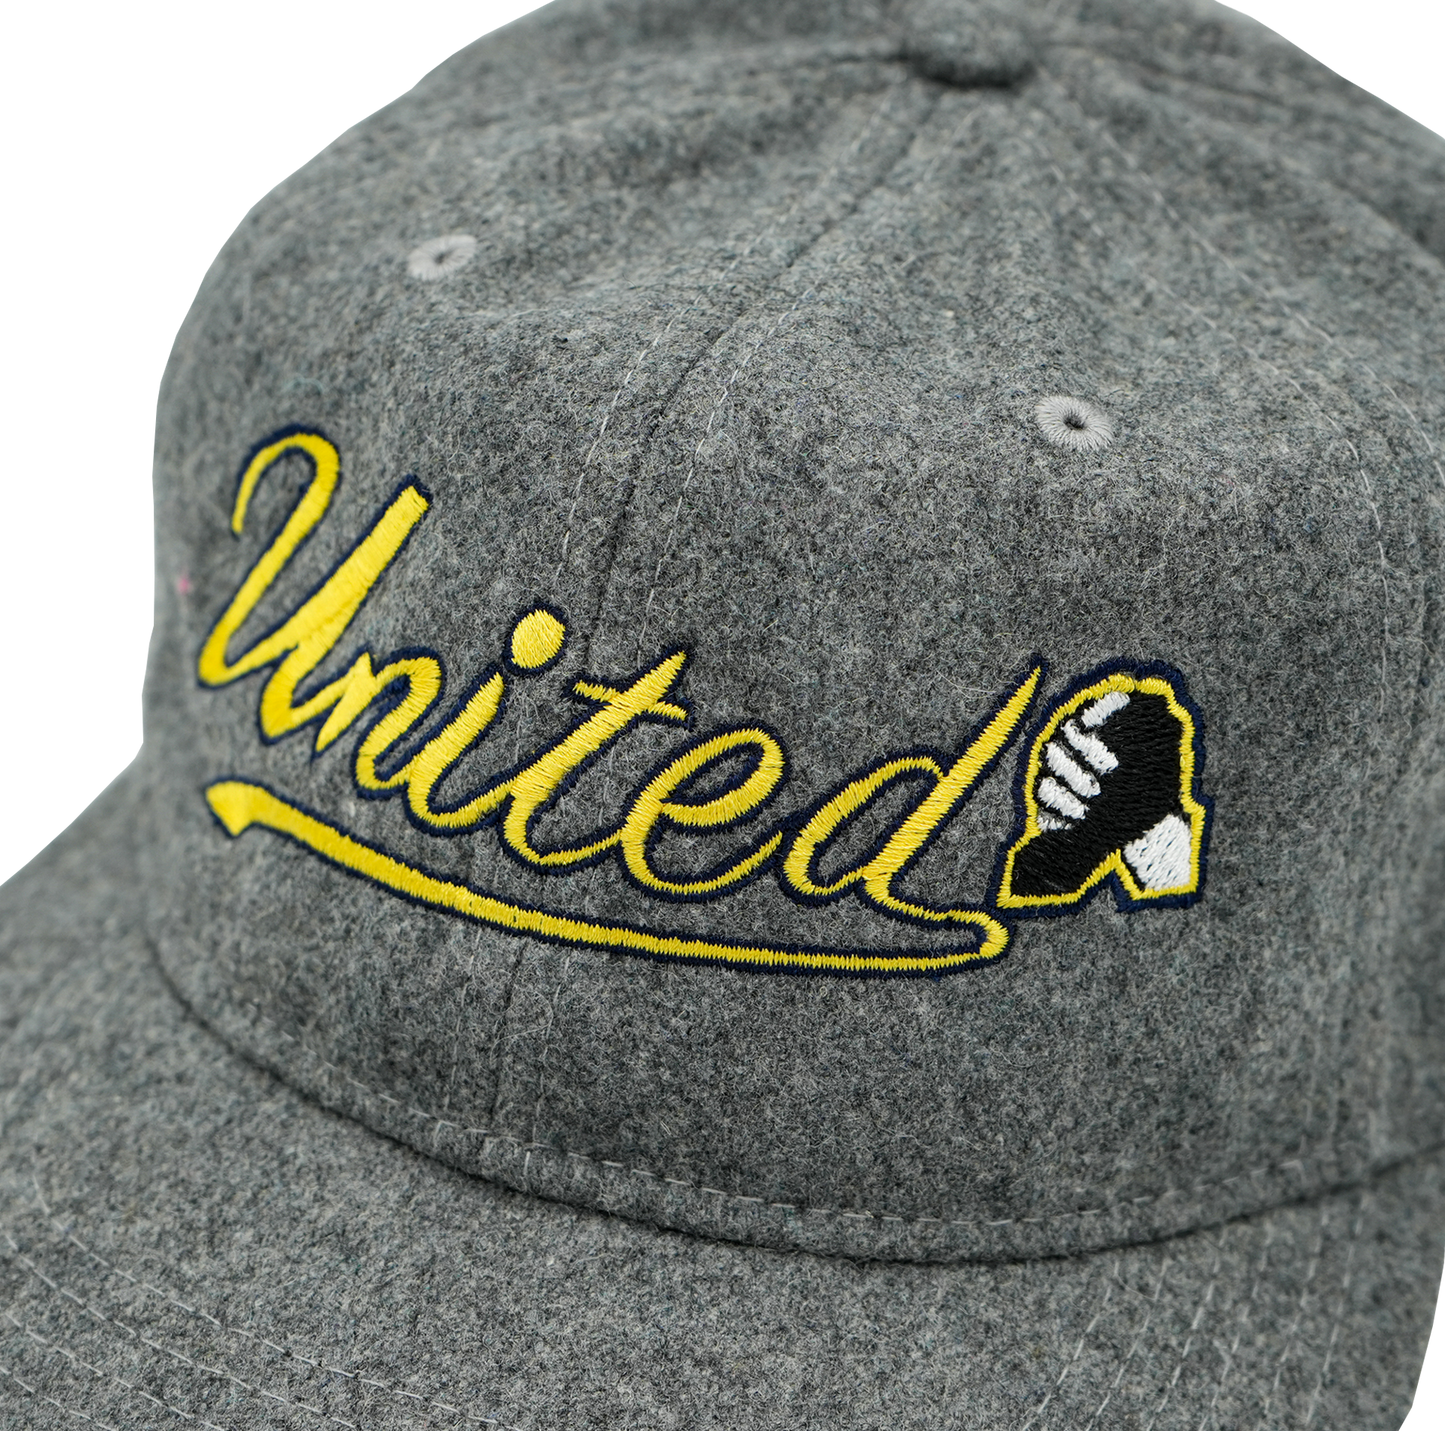 United Script Wool Hat - Gray